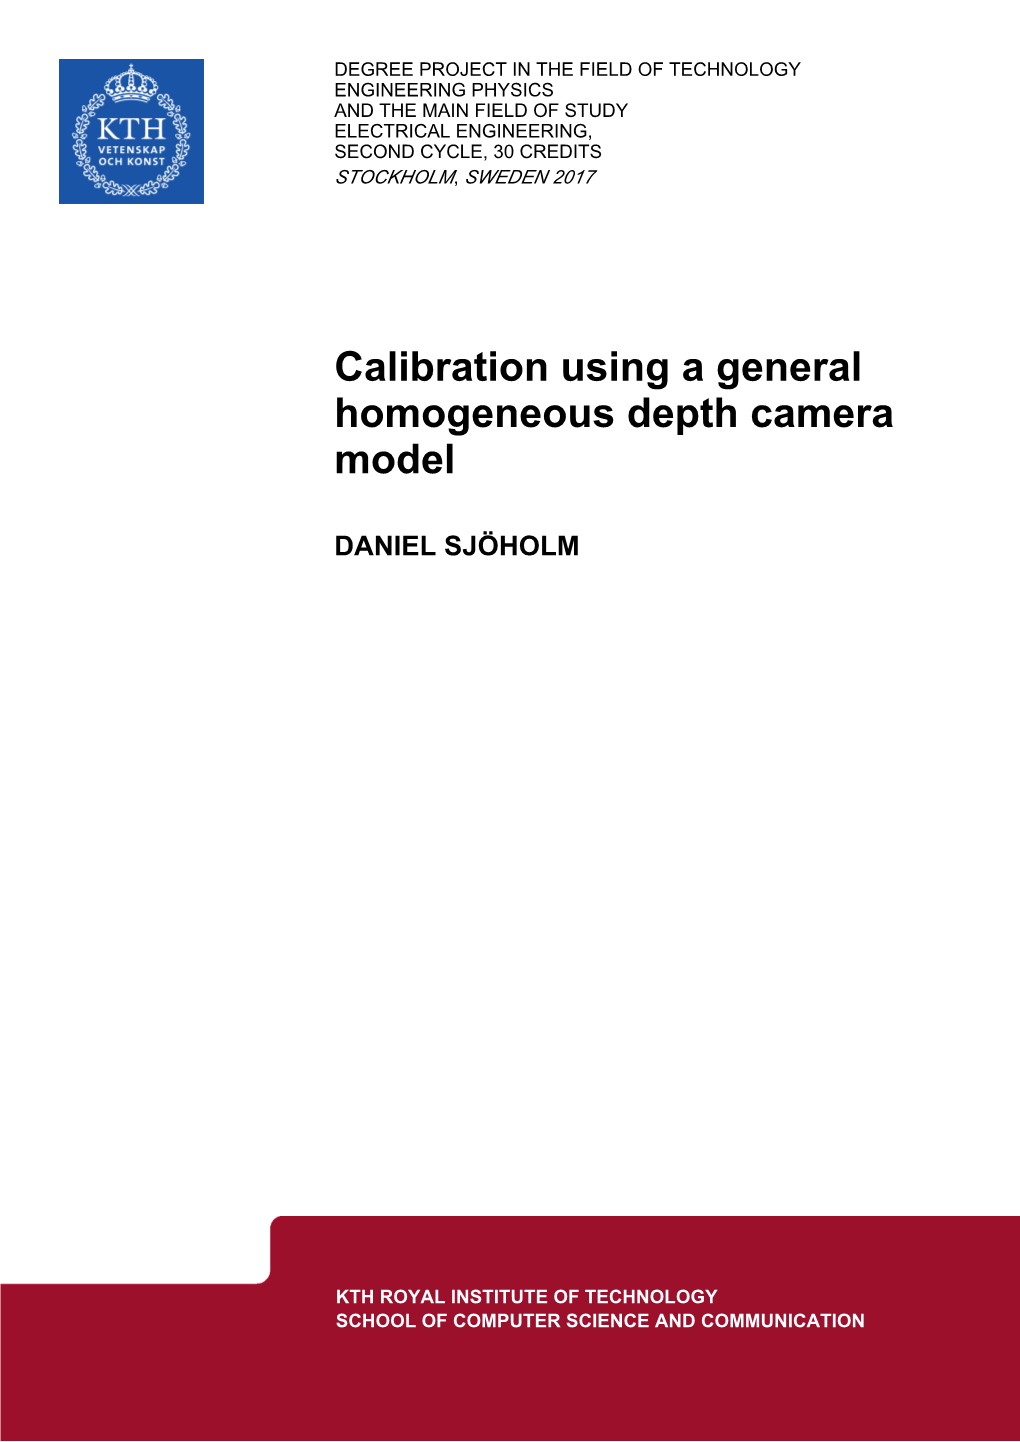 Calibration Using a General Homogeneous Depth Camera Model